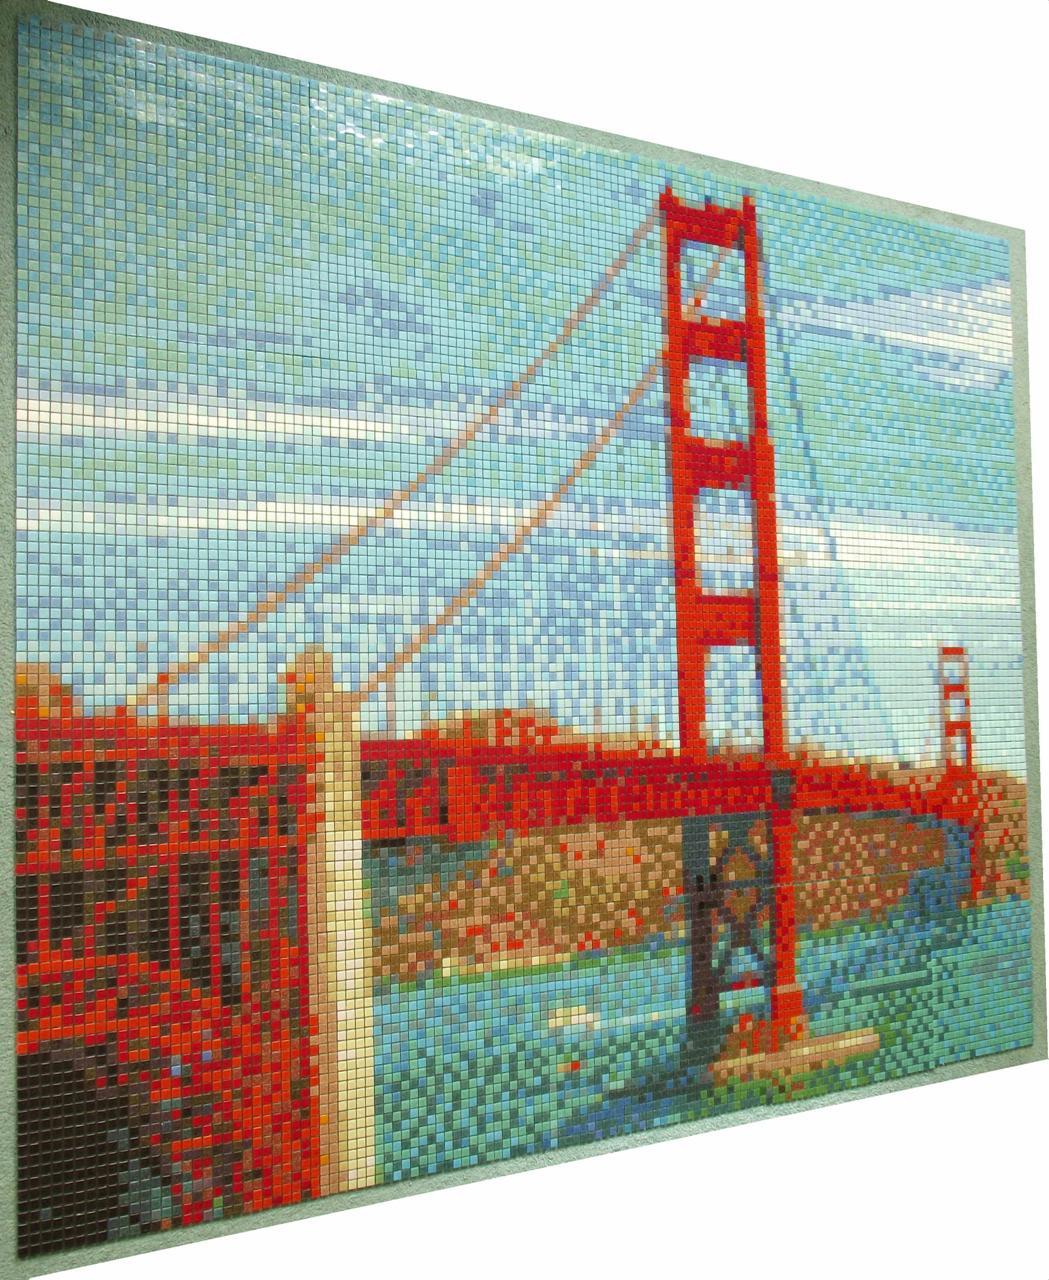 Golden Gate Bridge Mosaic Tile Art